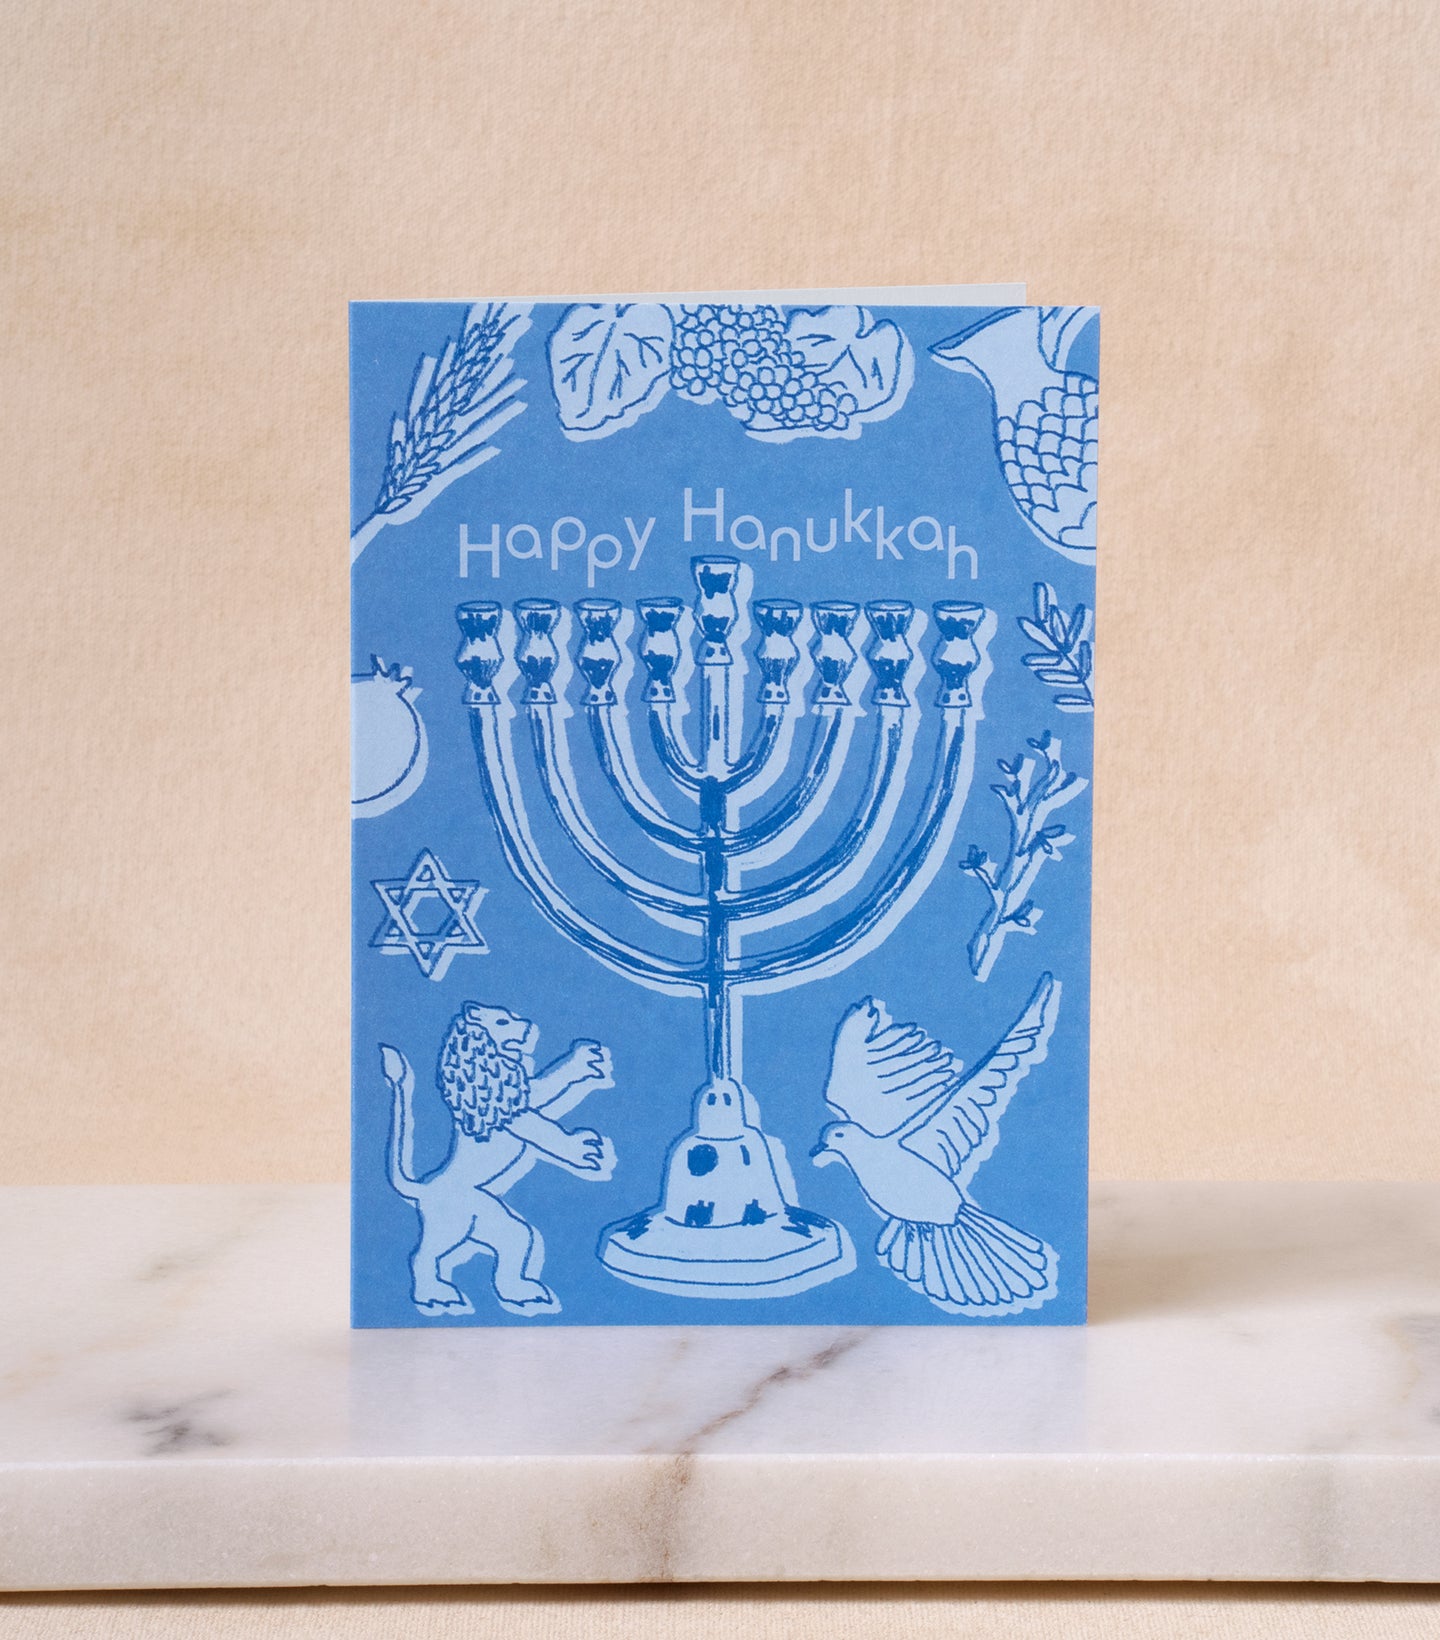 Load image into Gallery viewer, Happy Hanukkah greeting card with menorah design
